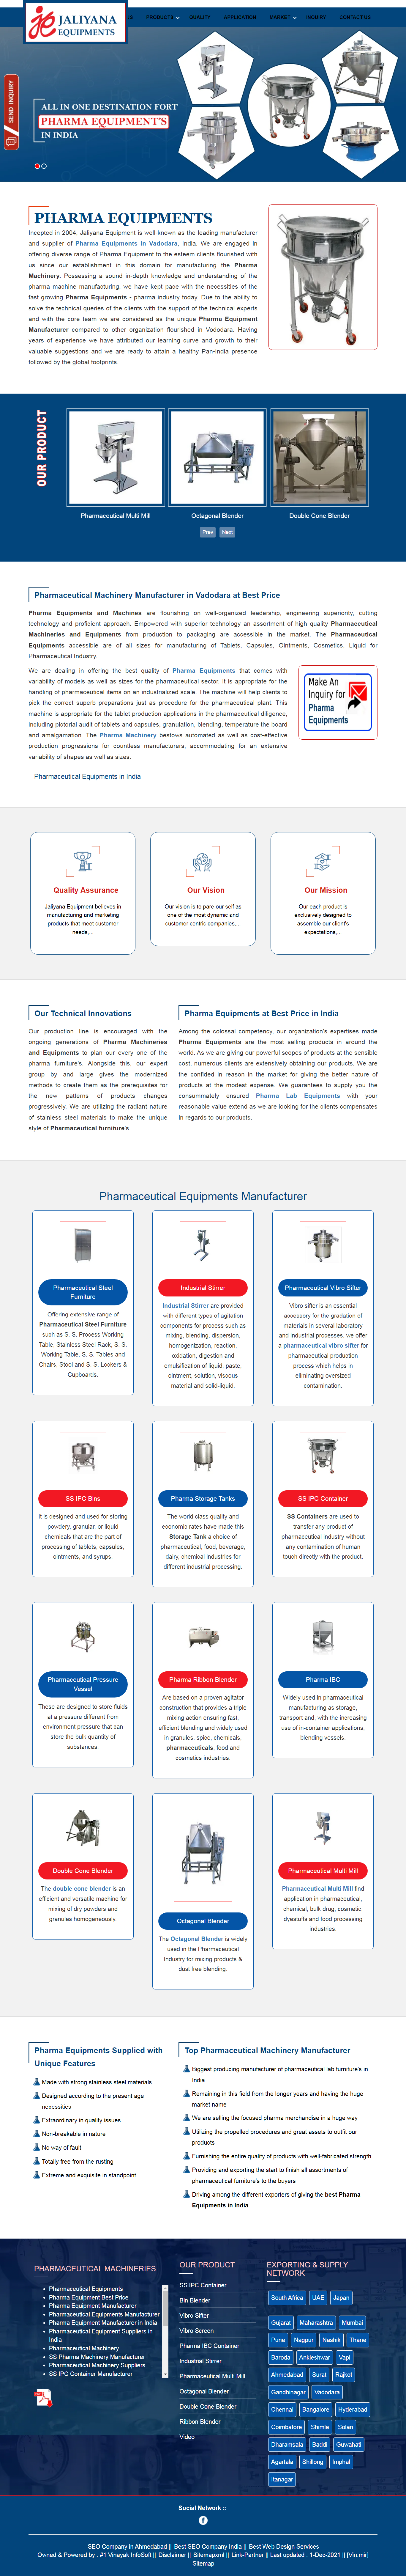 Pharma Equipment